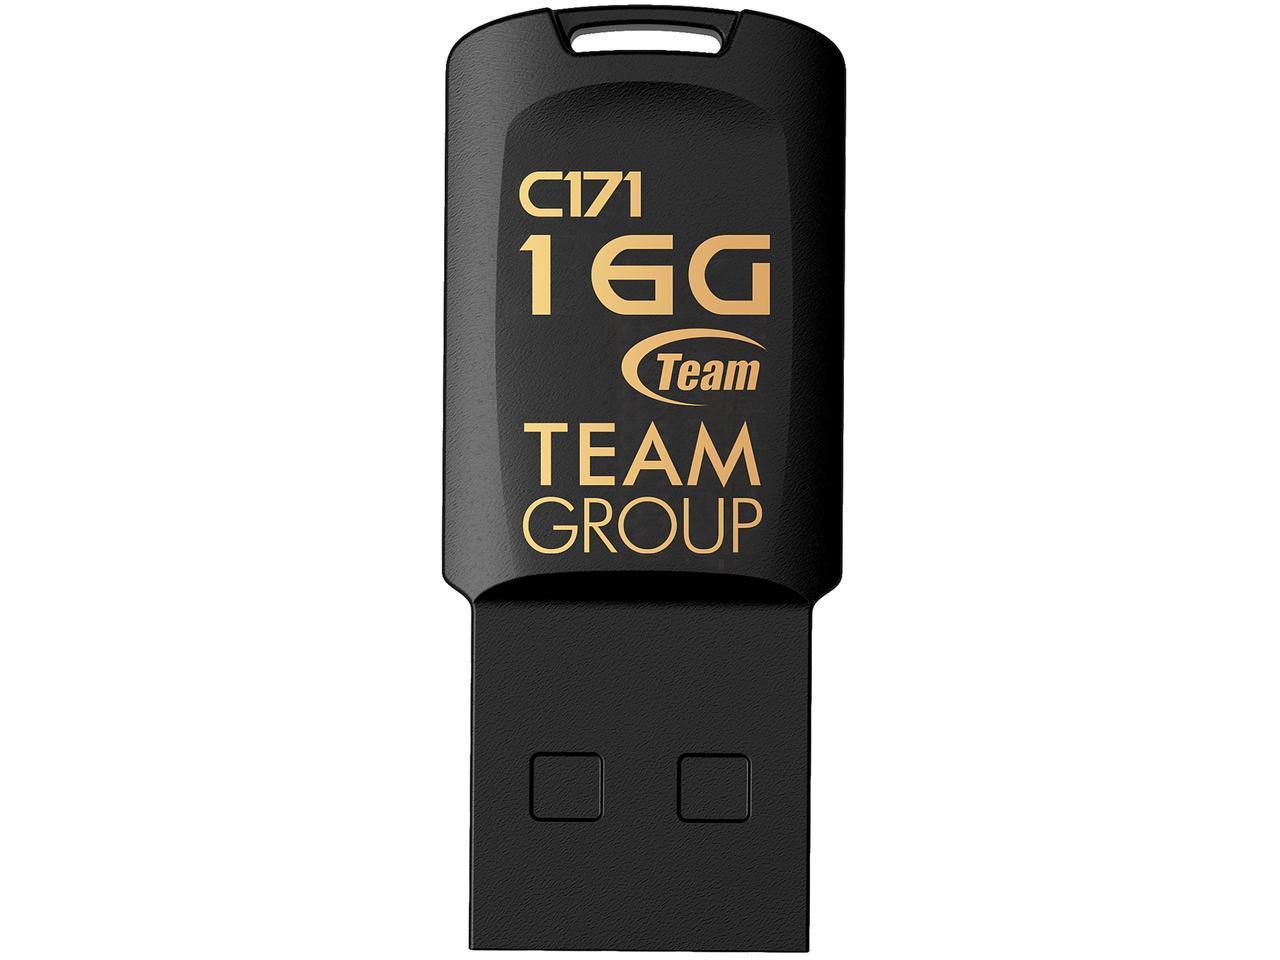 USB памет Team Group C171 16GB USB 2.0, Черен-1